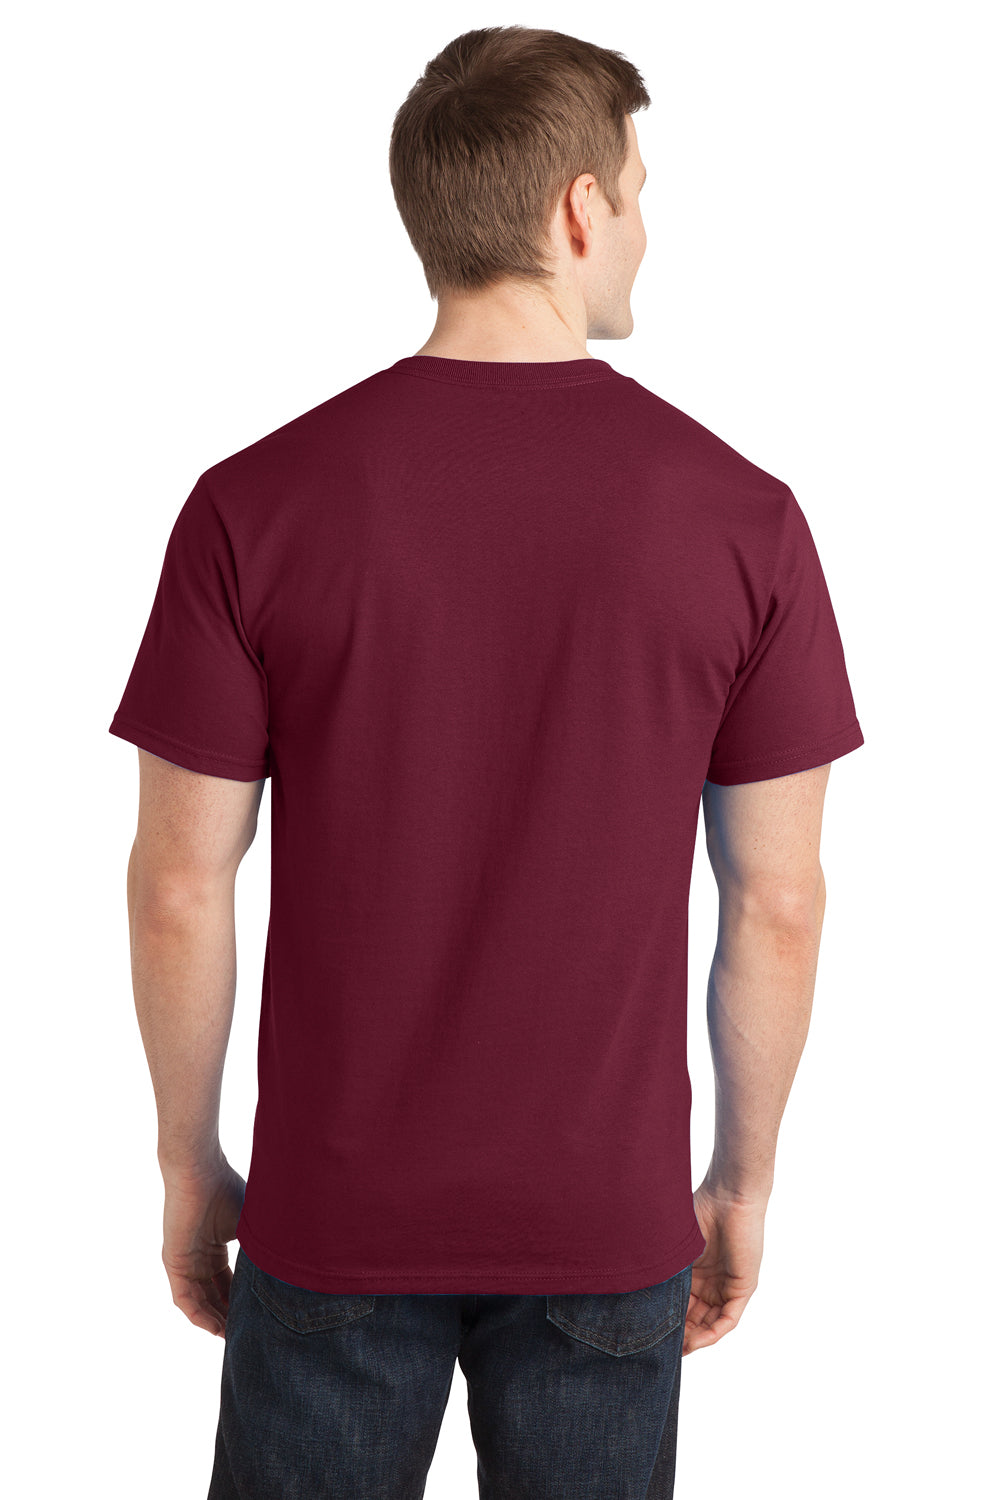 Port & Company PC150 Mens Short Sleeve Crewneck T-Shirt Cardinal Red Back